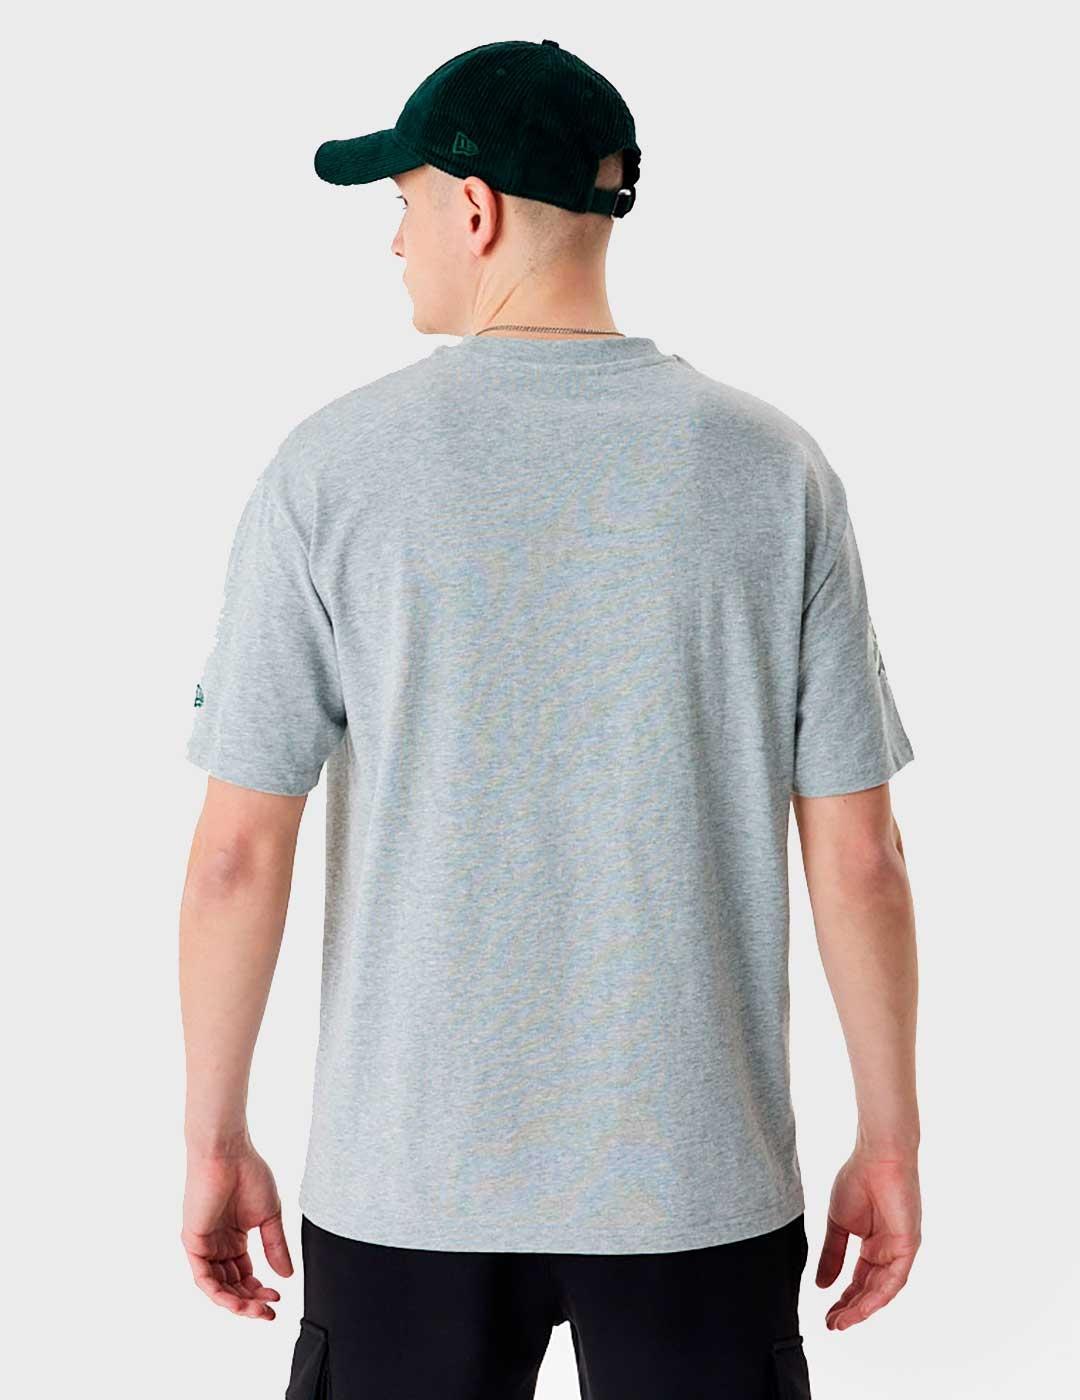 Camiseta New Era Team Patch Tee gris para hombre